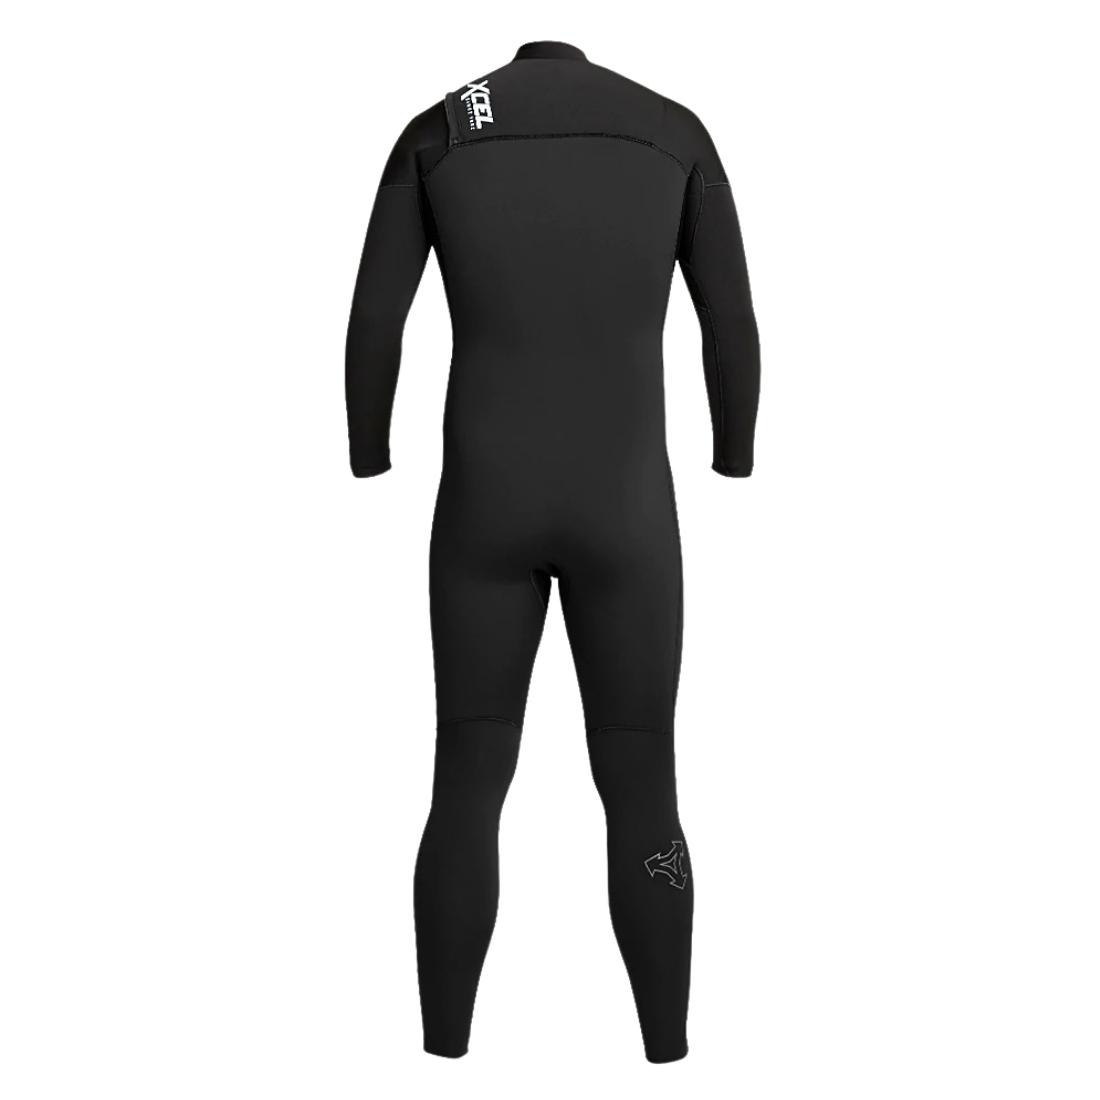 Xcel Mens 4/3mm Comp Wetsuit - Black - Mens Full Length Wetsuit by Xcel